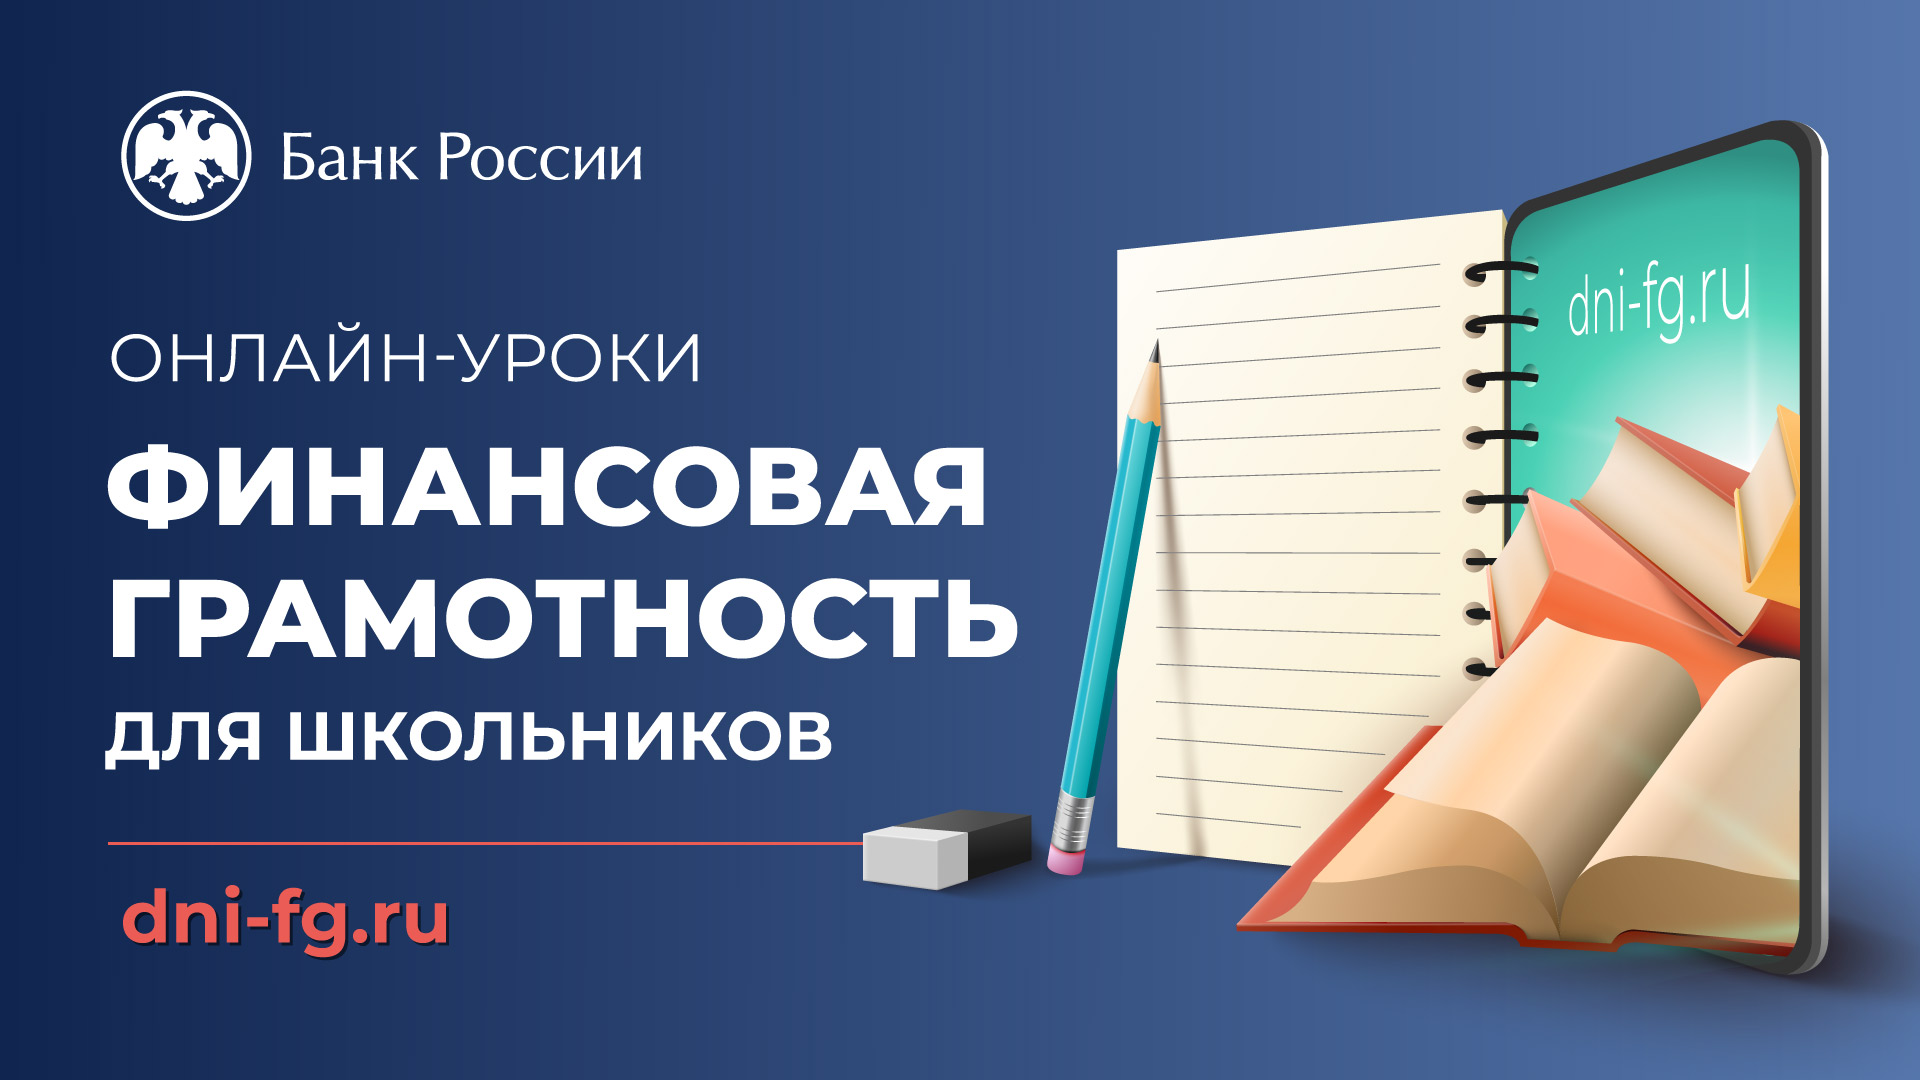 Онлайн-уроки по финансовой грамотности от Банка России.